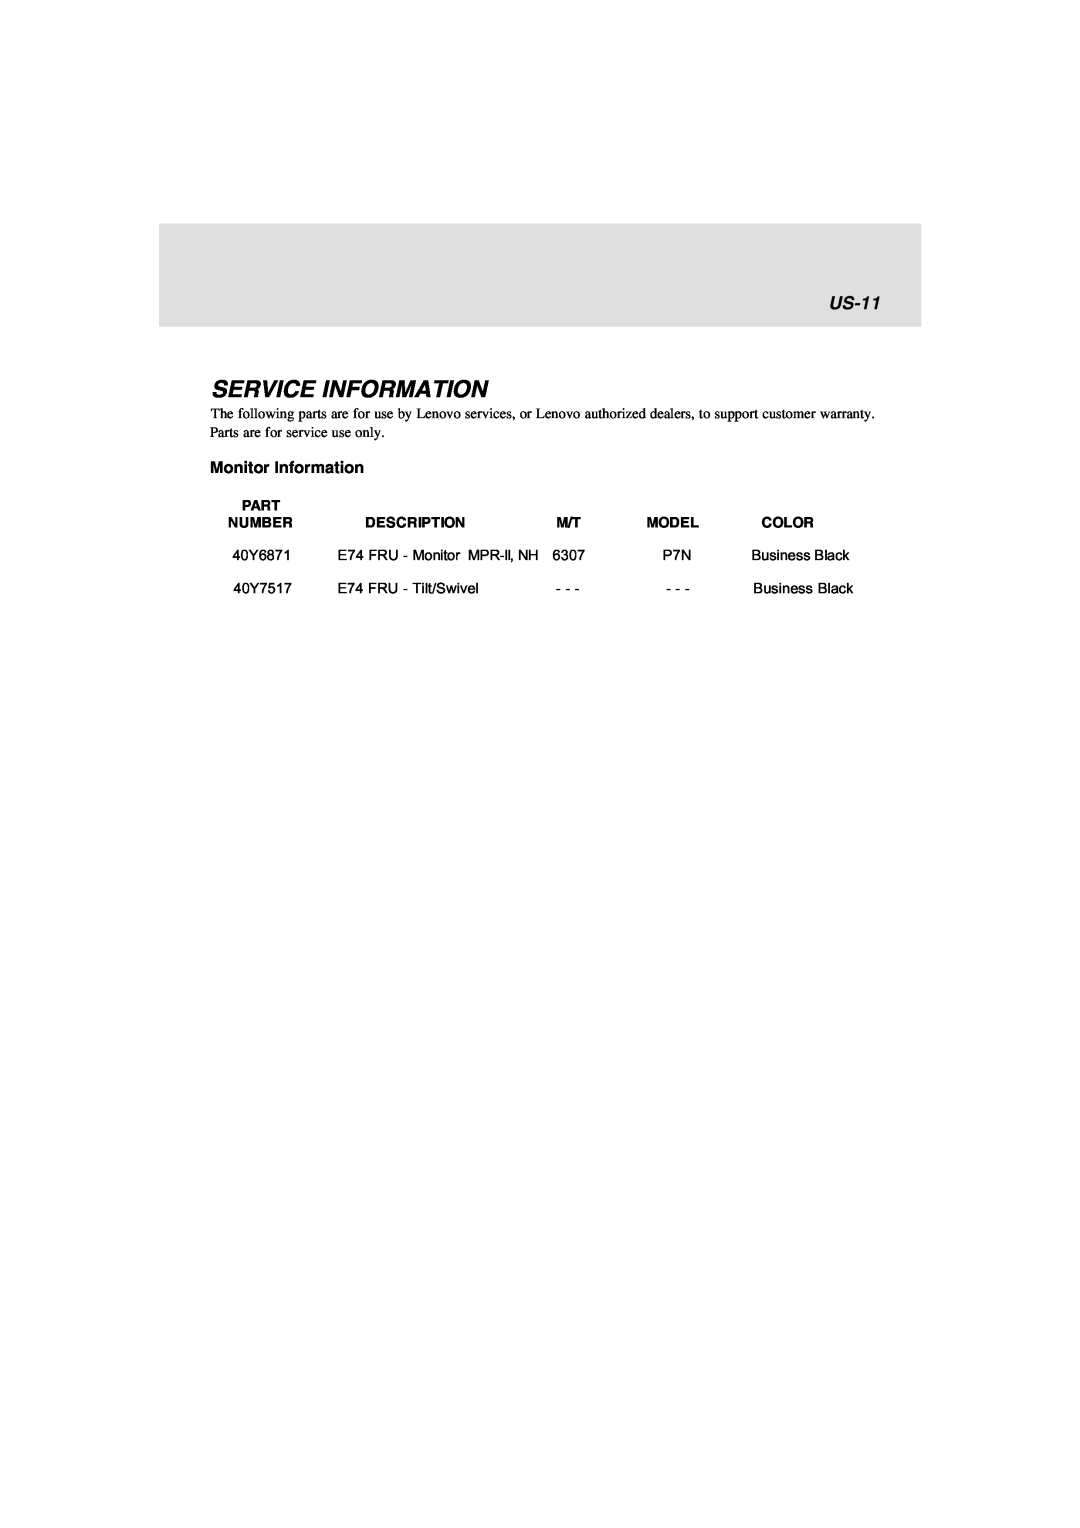 Lenovo E74 manual Service Information, US-11, Number, Description, Model, Color, Part, 40Y6871, 40Y7517, Business Black 